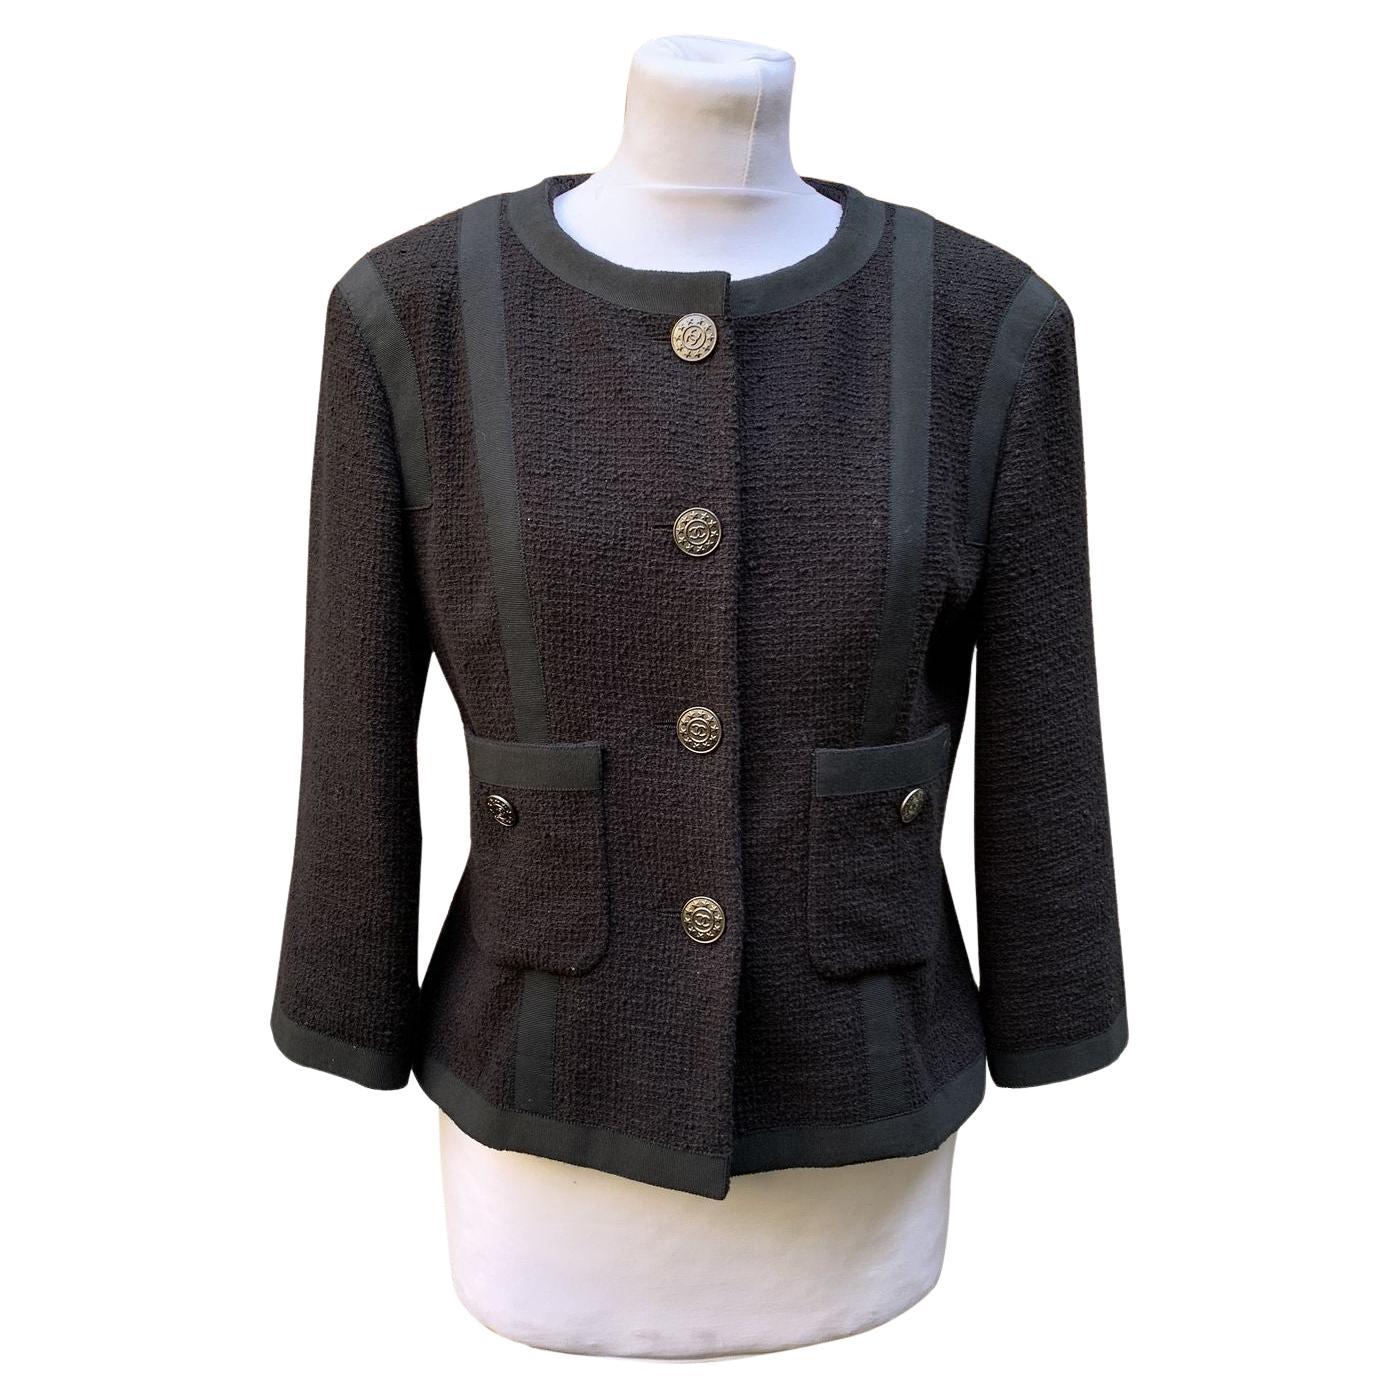 Chanel 2013 Black Cotton Tweed 3/4 Length Jacket Size 36 FR For Sale